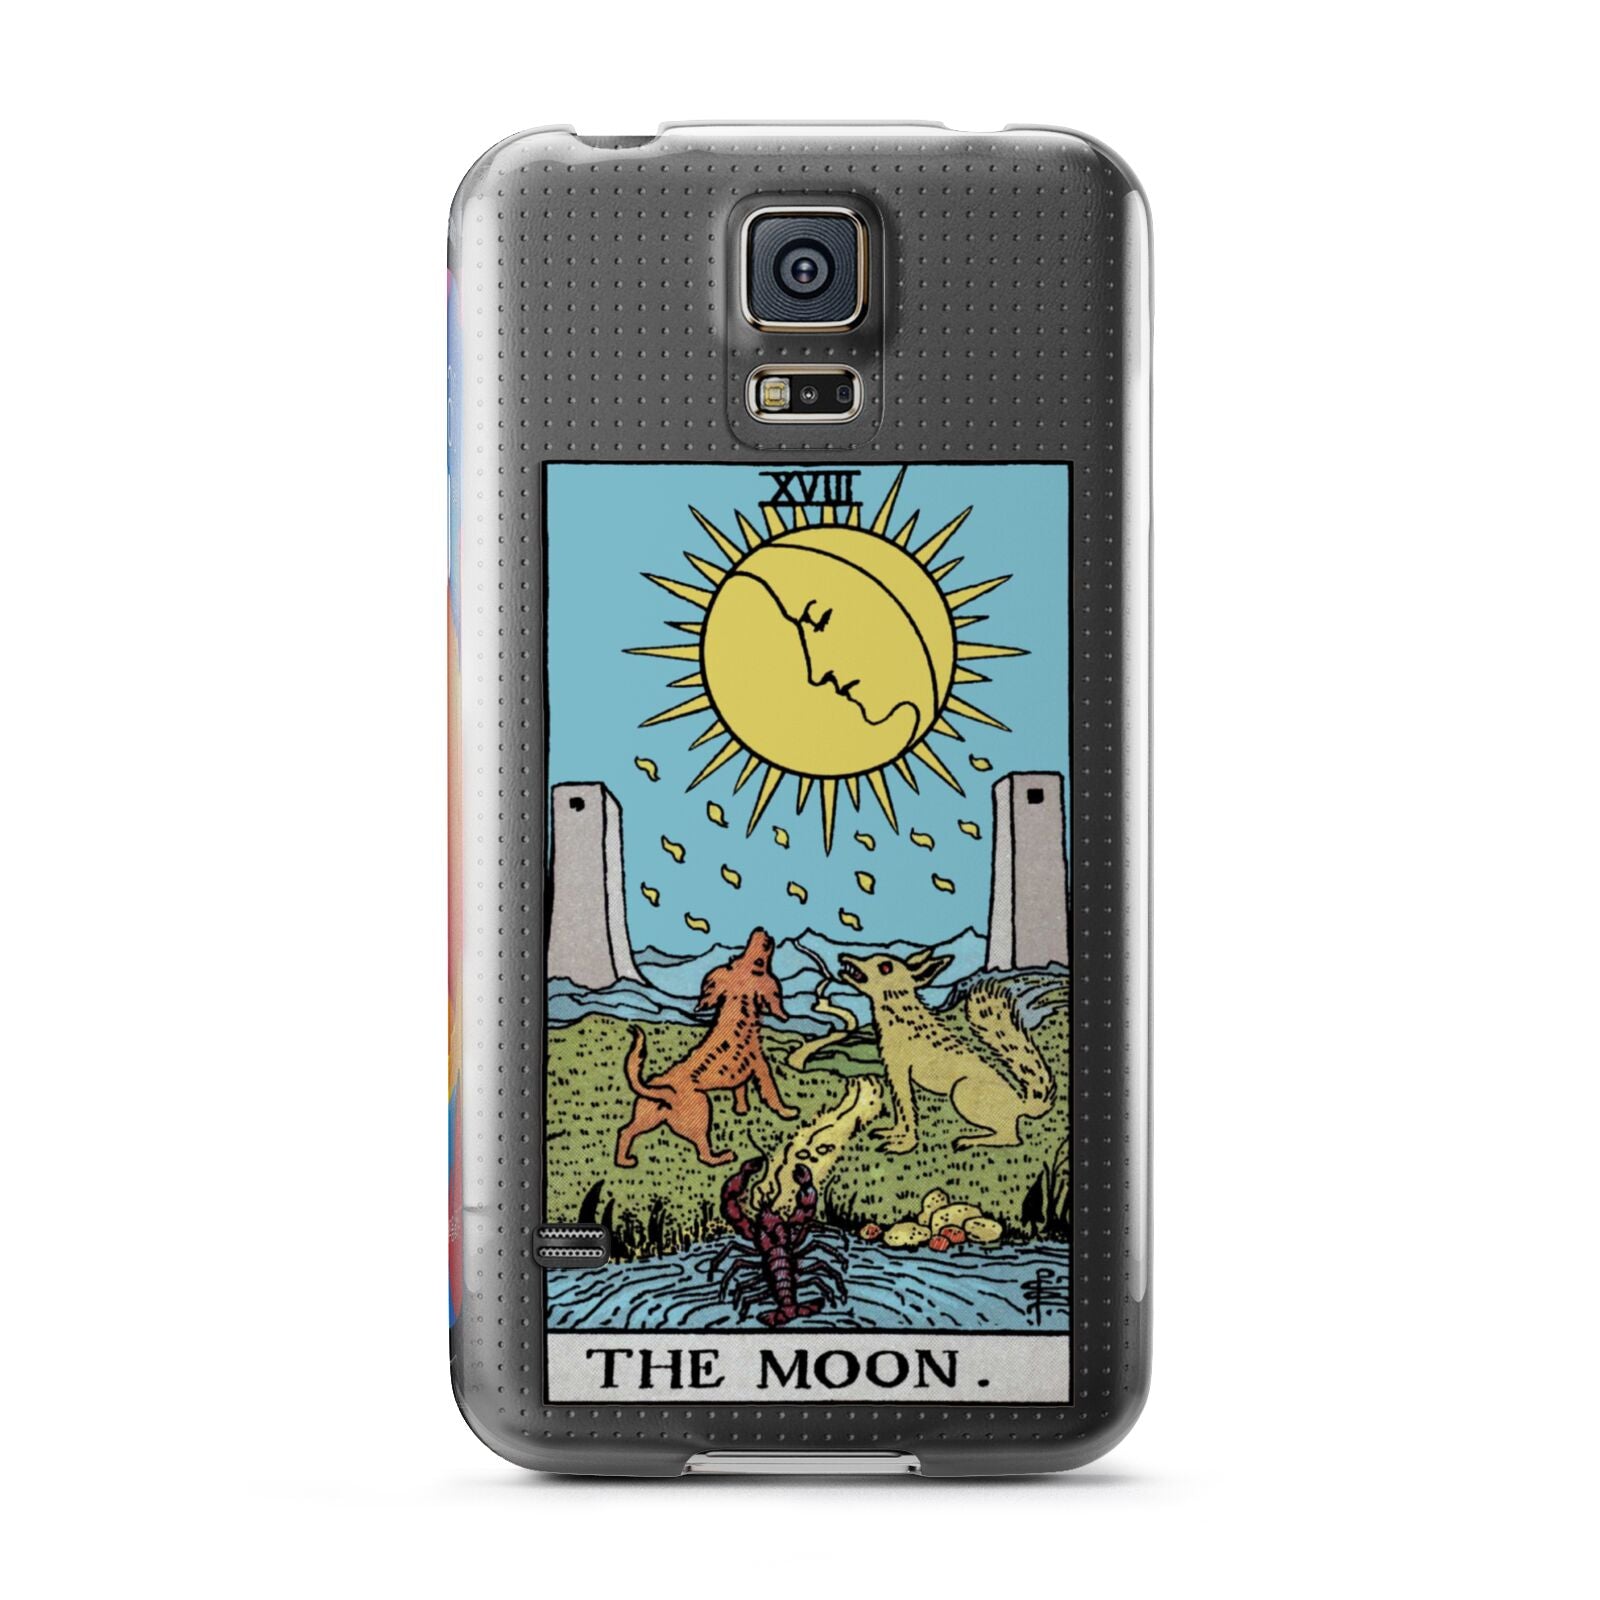 The Moon Tarot Card Samsung Galaxy S5 Case